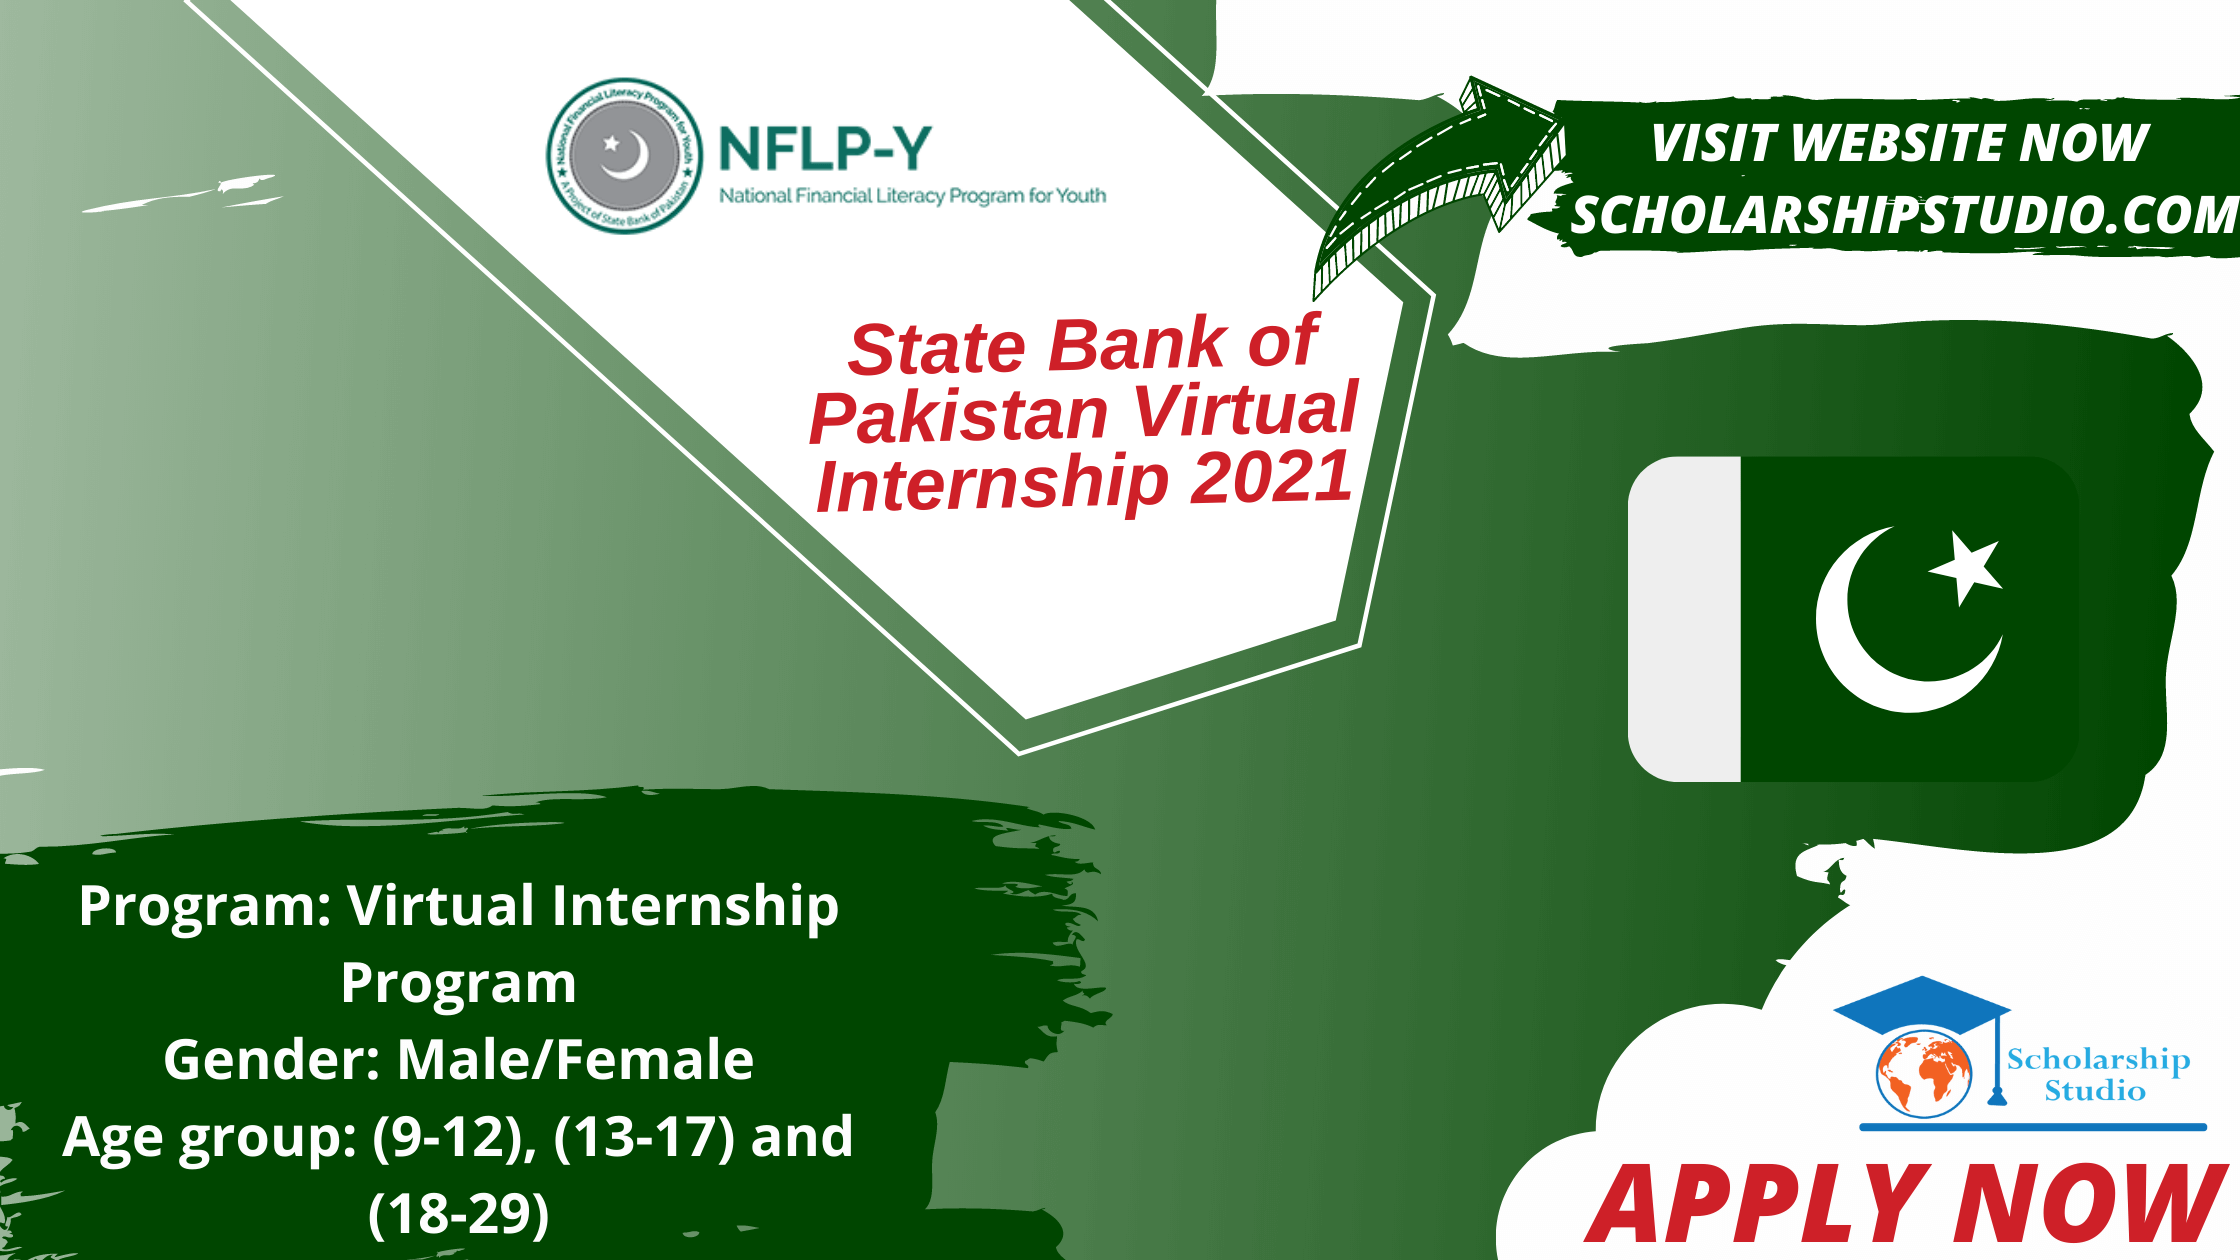 State Bank of Pakistan Virtual Internship 2022 Scholarship studio